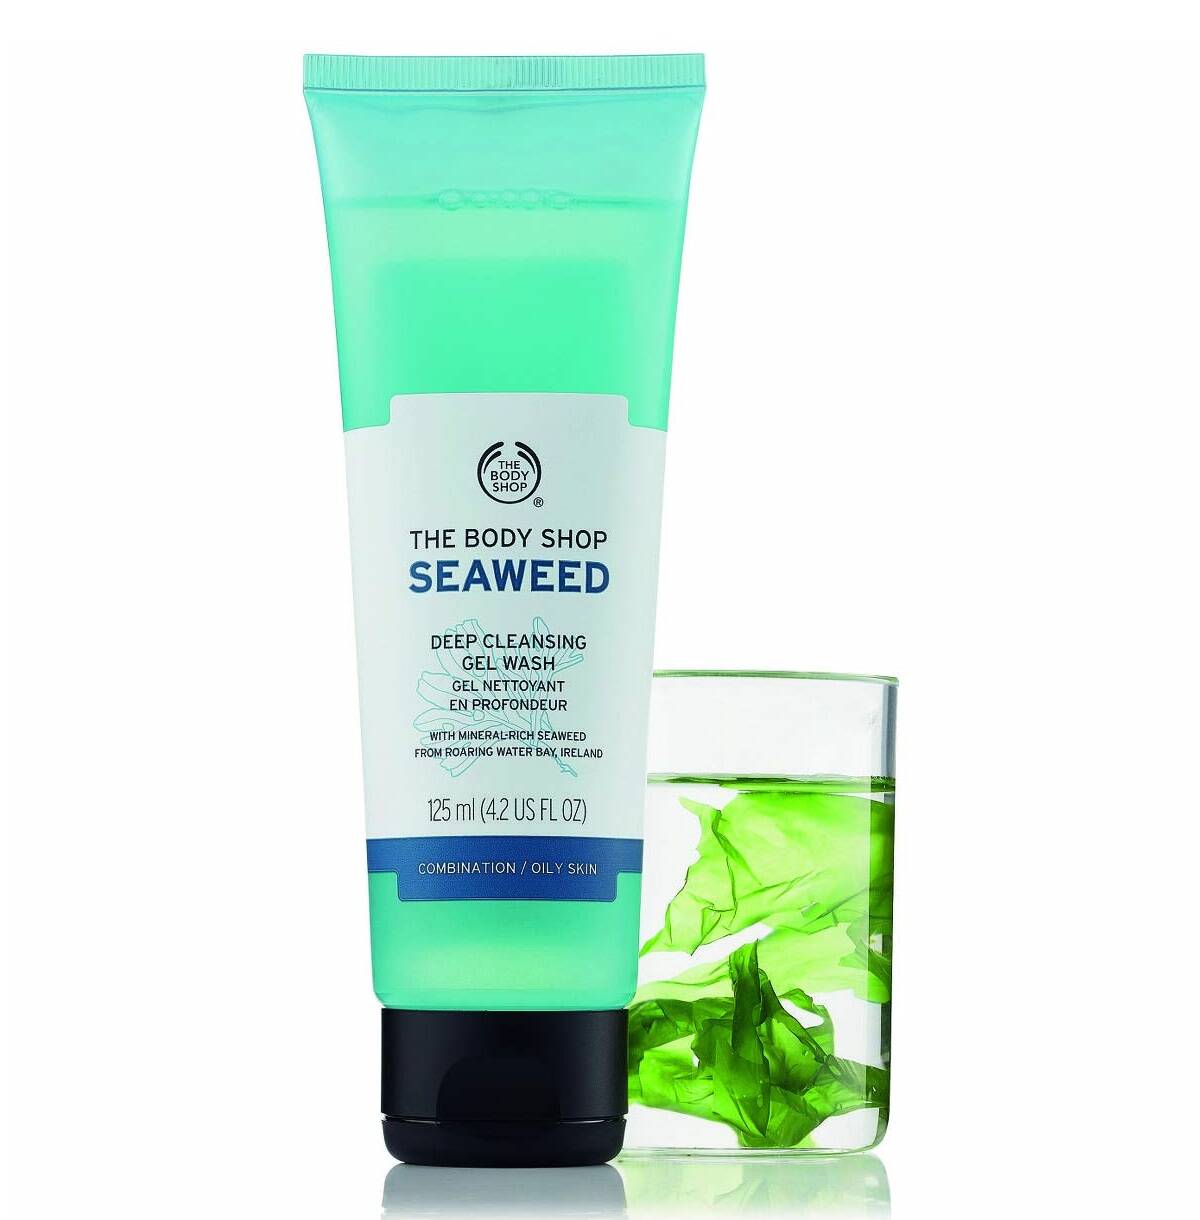 ژل شستشو سیوید جلبک دریایی بادی شاپ اصل برای پوست چرب و مختلط چرب (The Body Shop Seaweed Deep Cleansing Gel Wash 125ml)